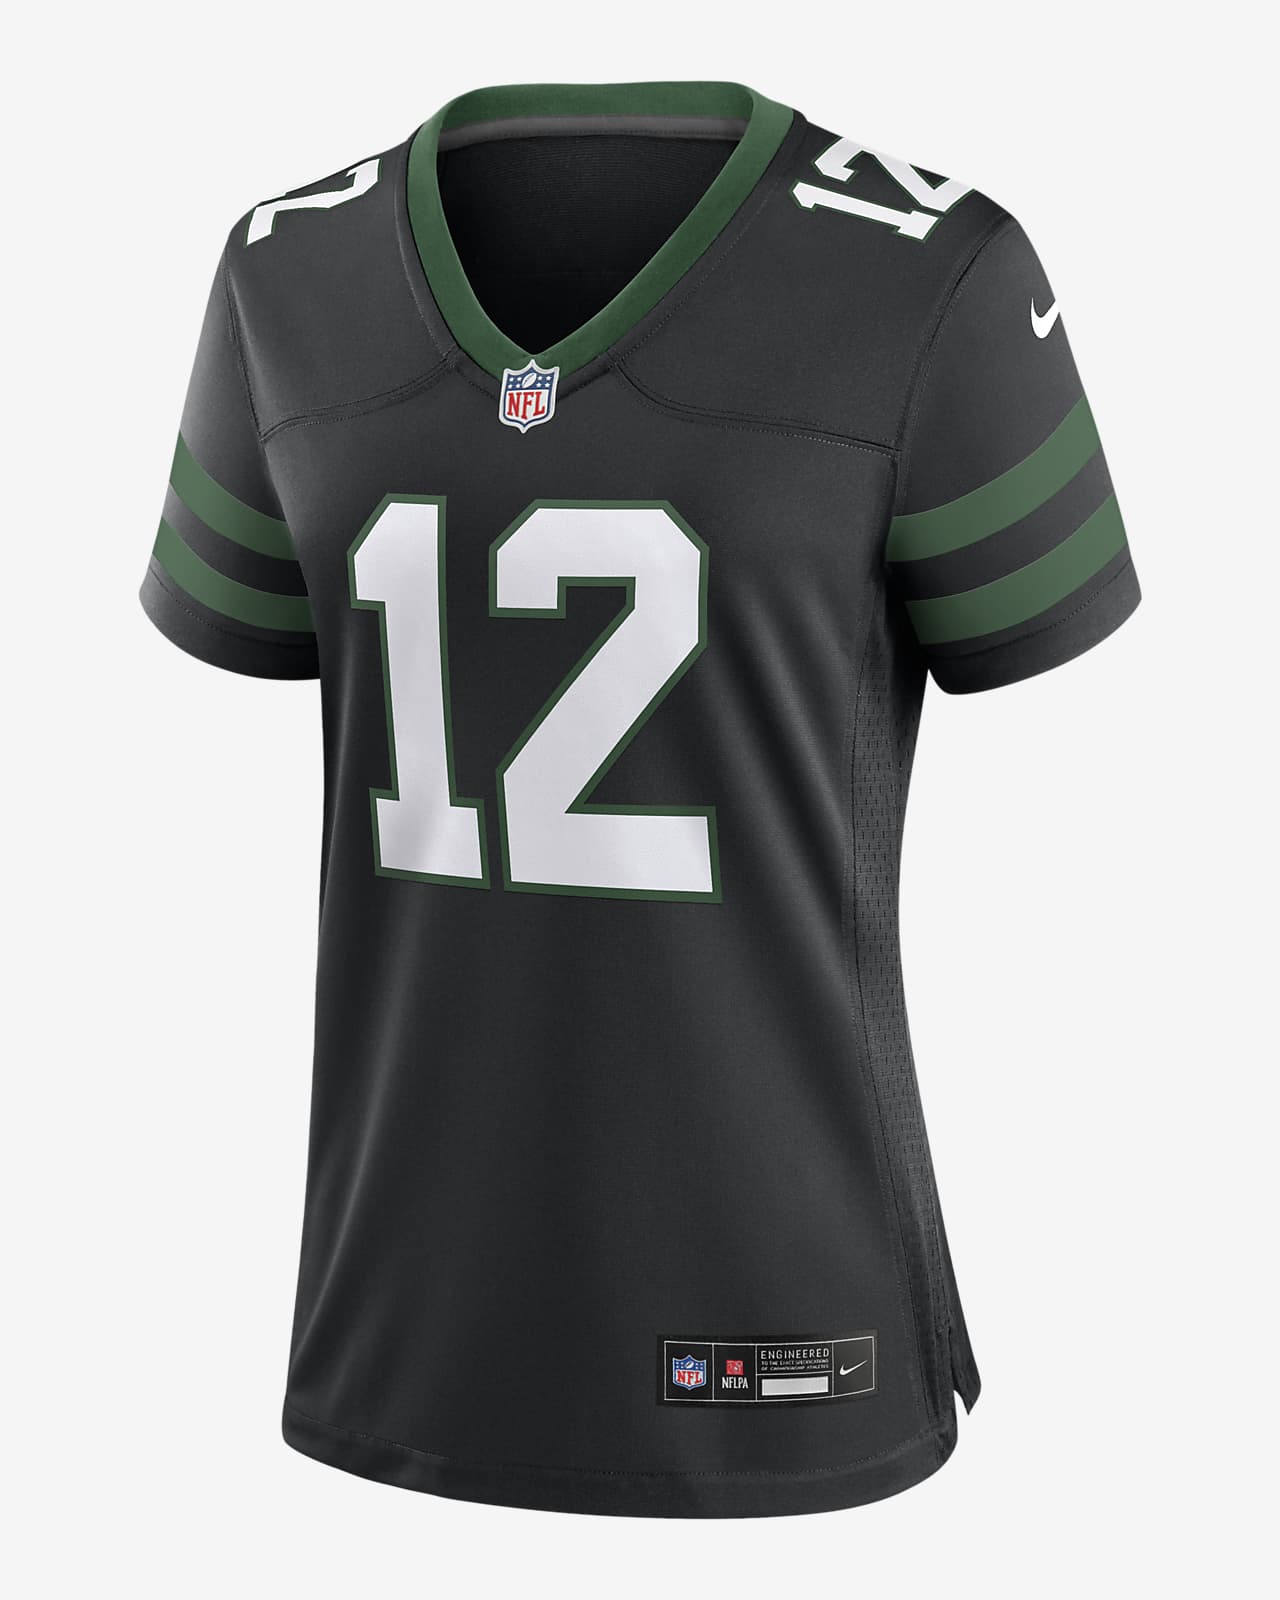 Jersey de fútbol americano Nike de la NFL Game para mujer Joe Namath New York Jets